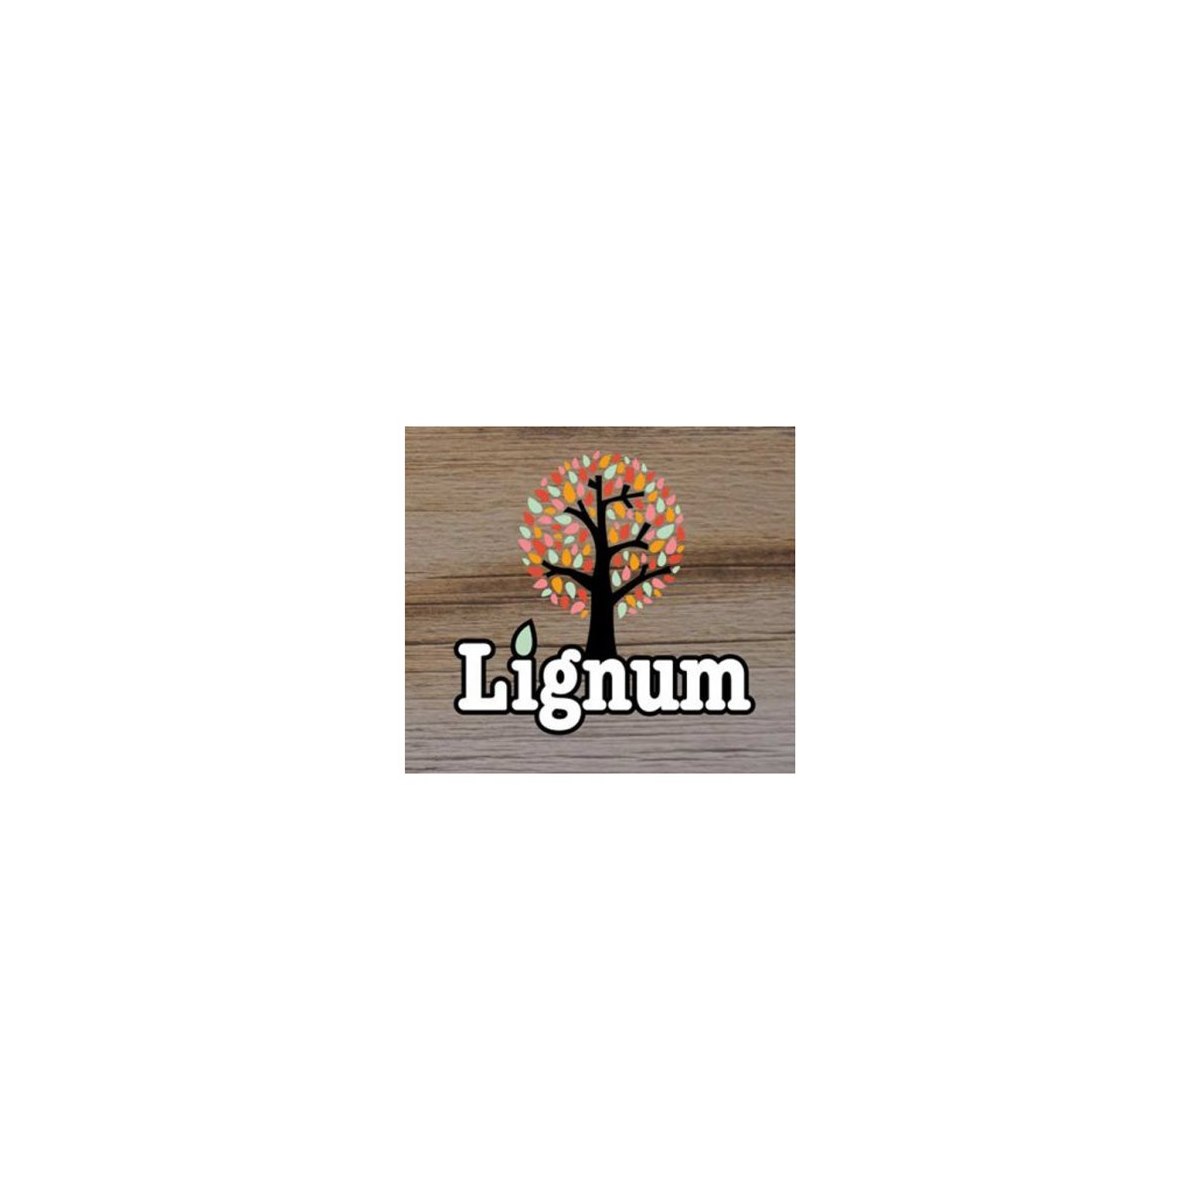 Lignum Products